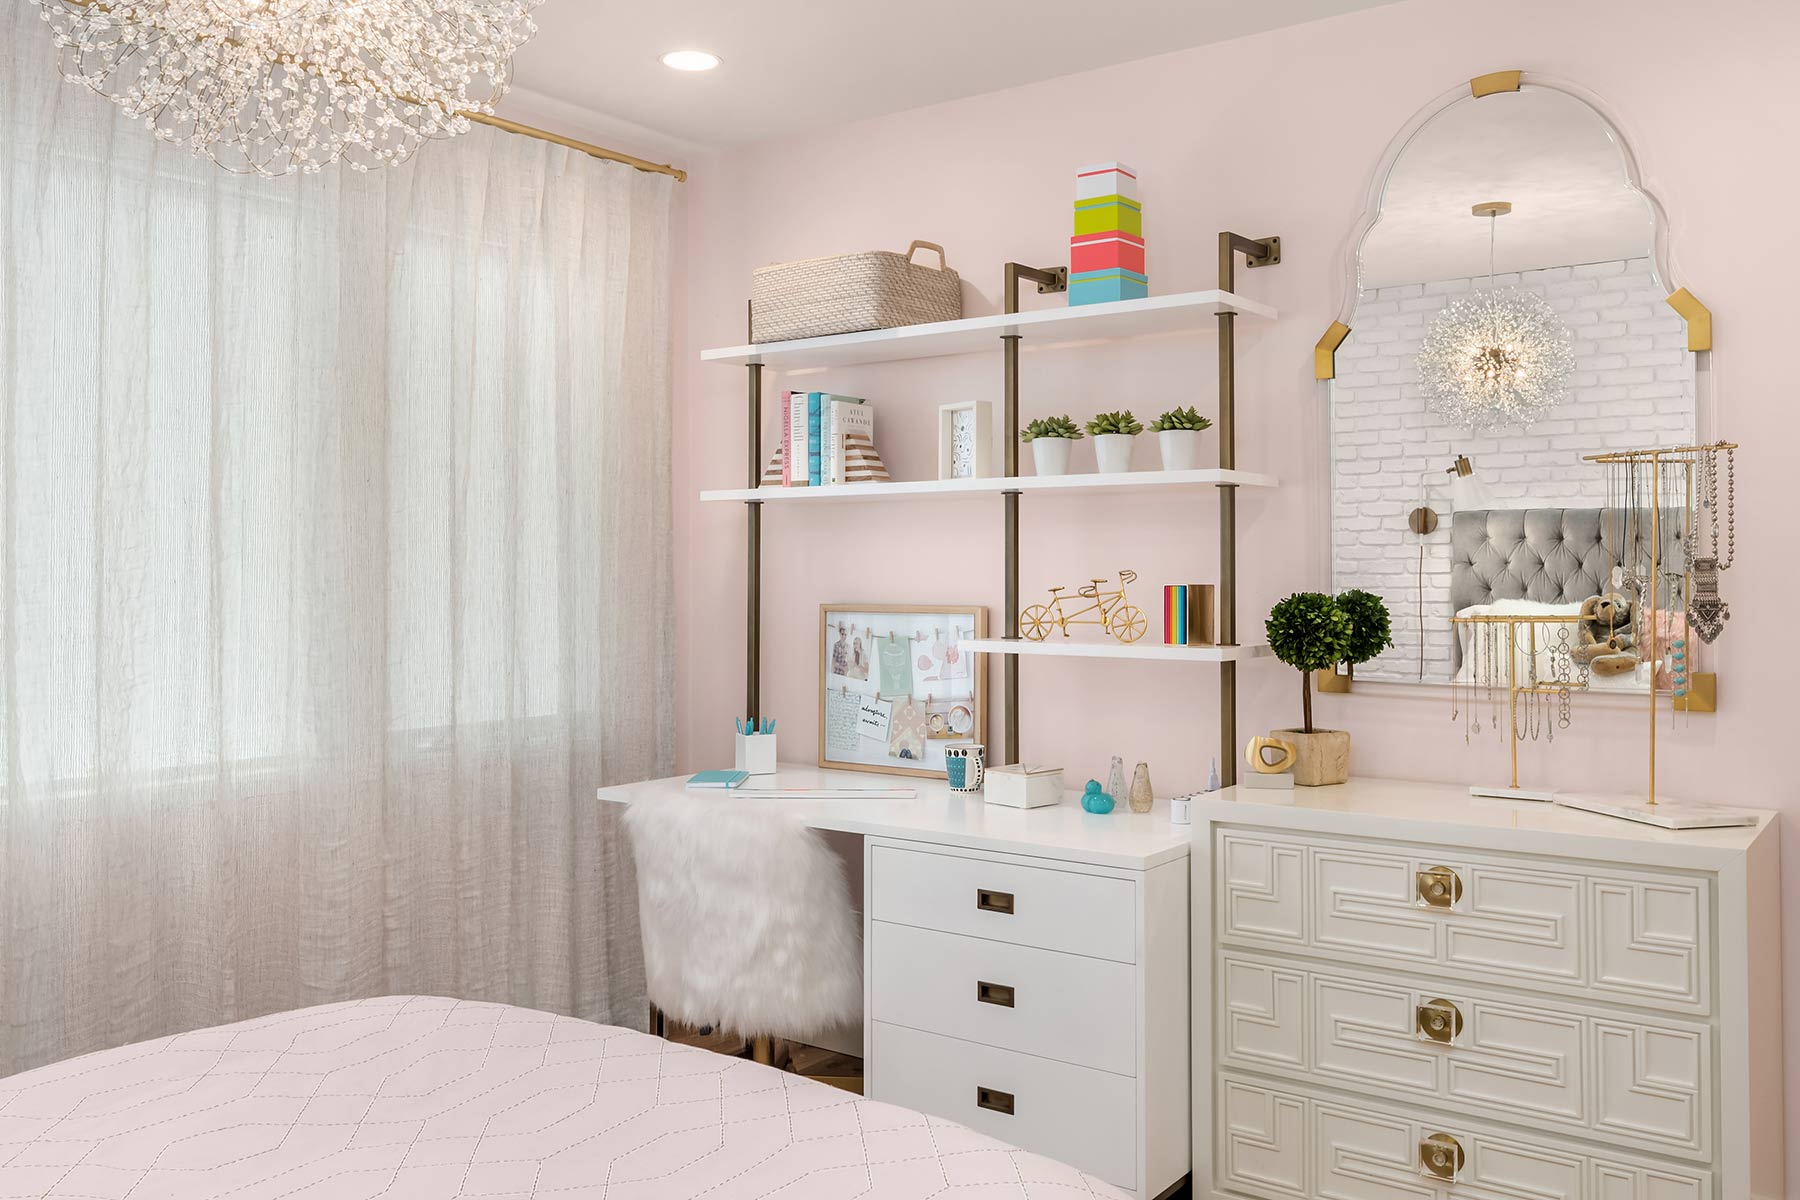 Provanti Designs 'Pretty in Pink' teen bedroom design - featured on Houzz